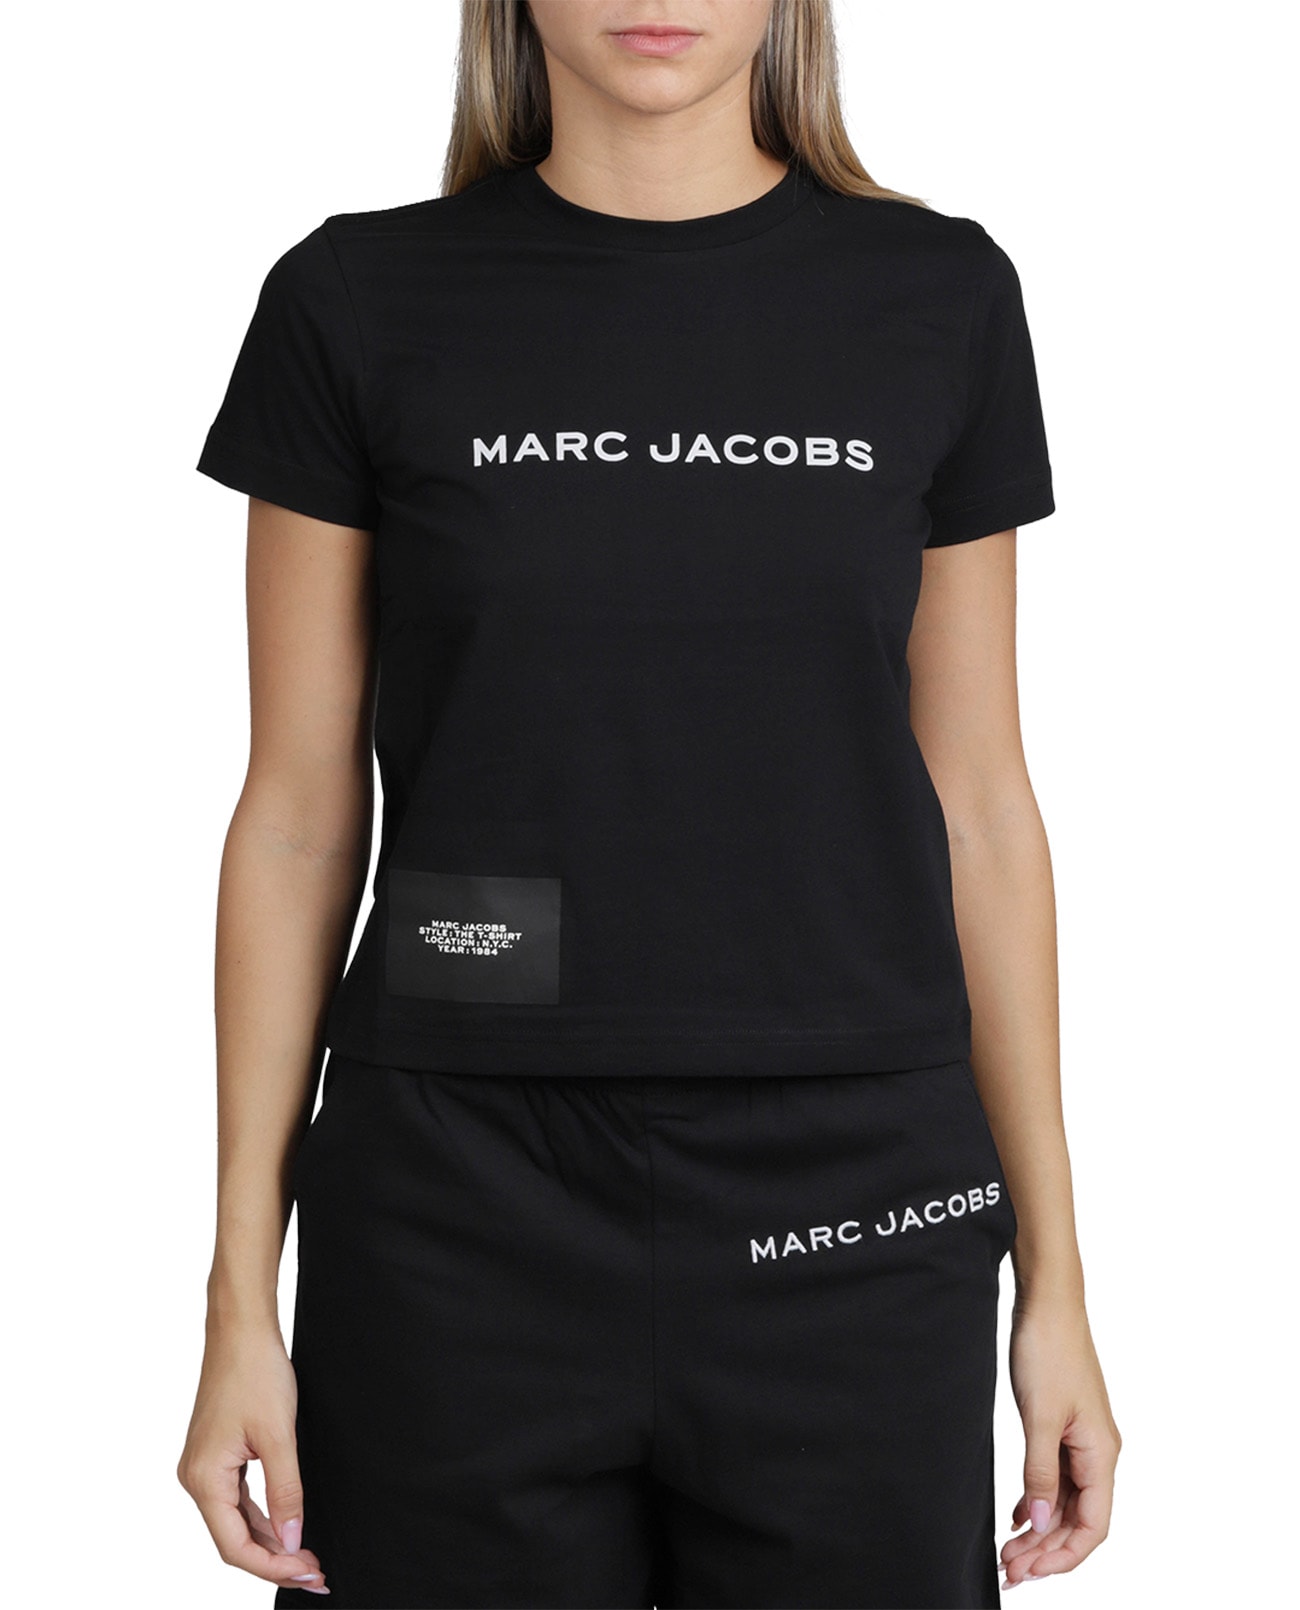 Marc Jacobs Black T-shirt